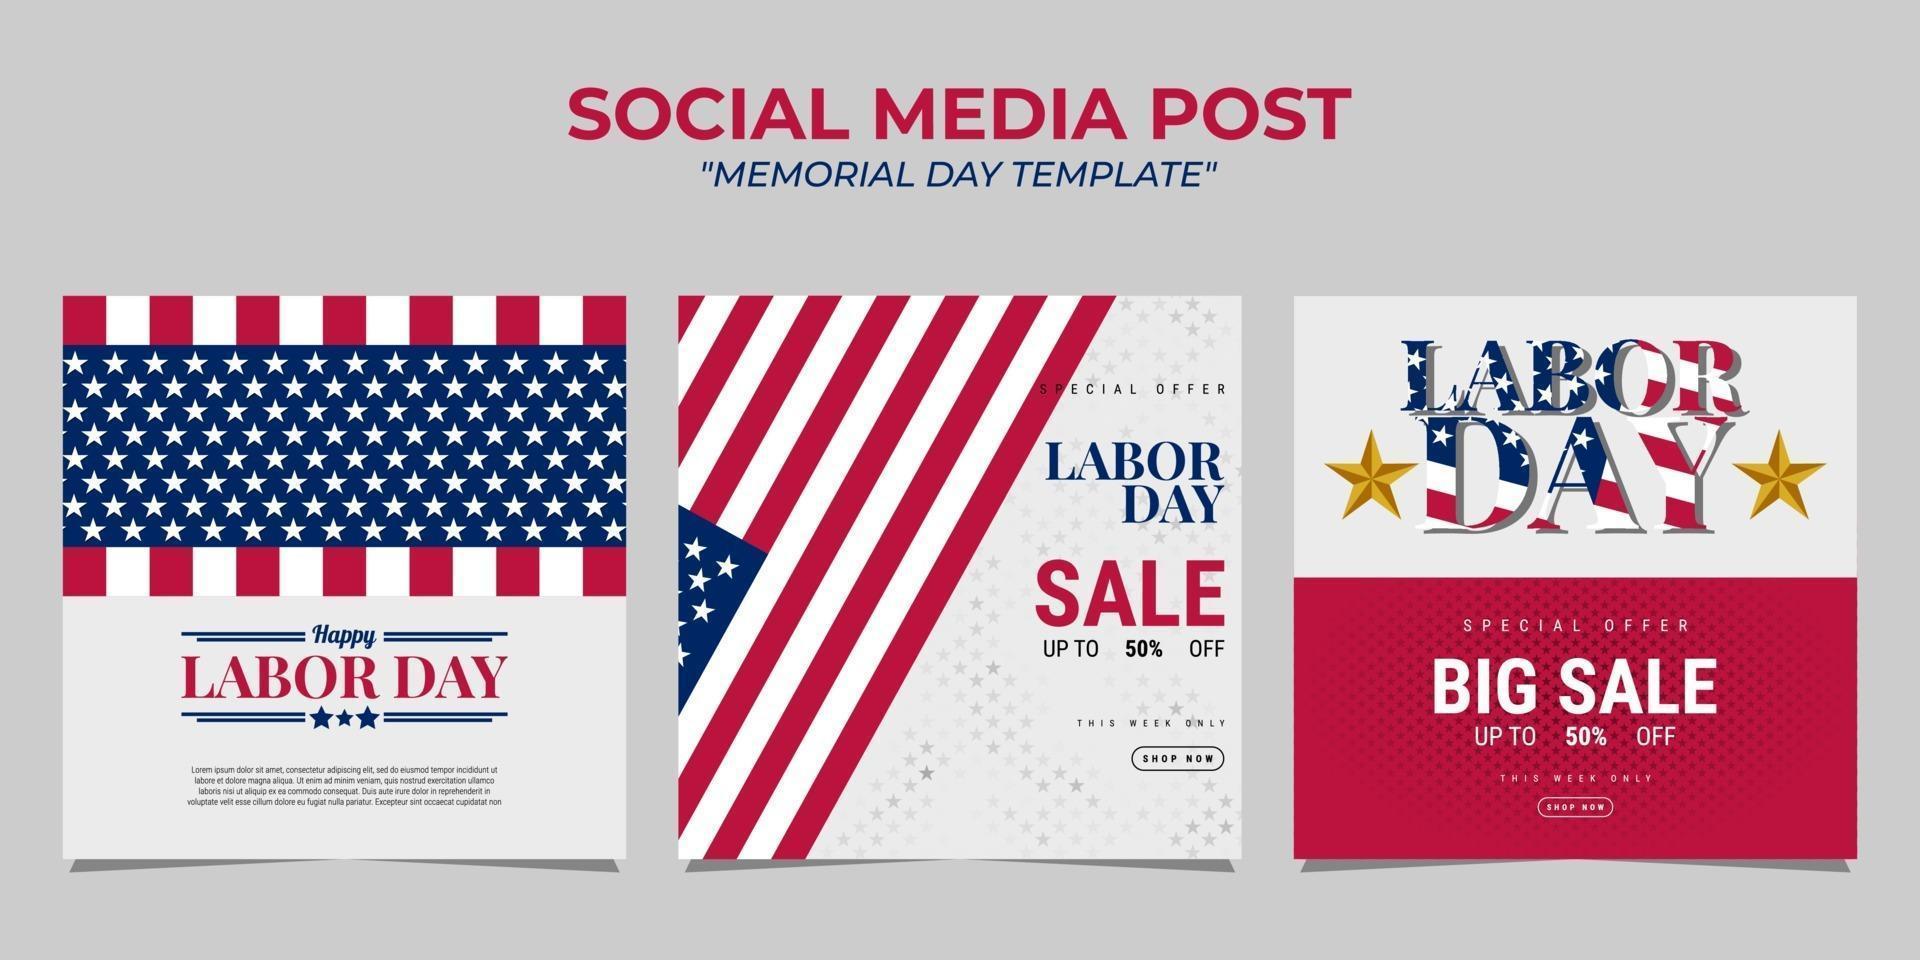 Labor Day social media post template design vector